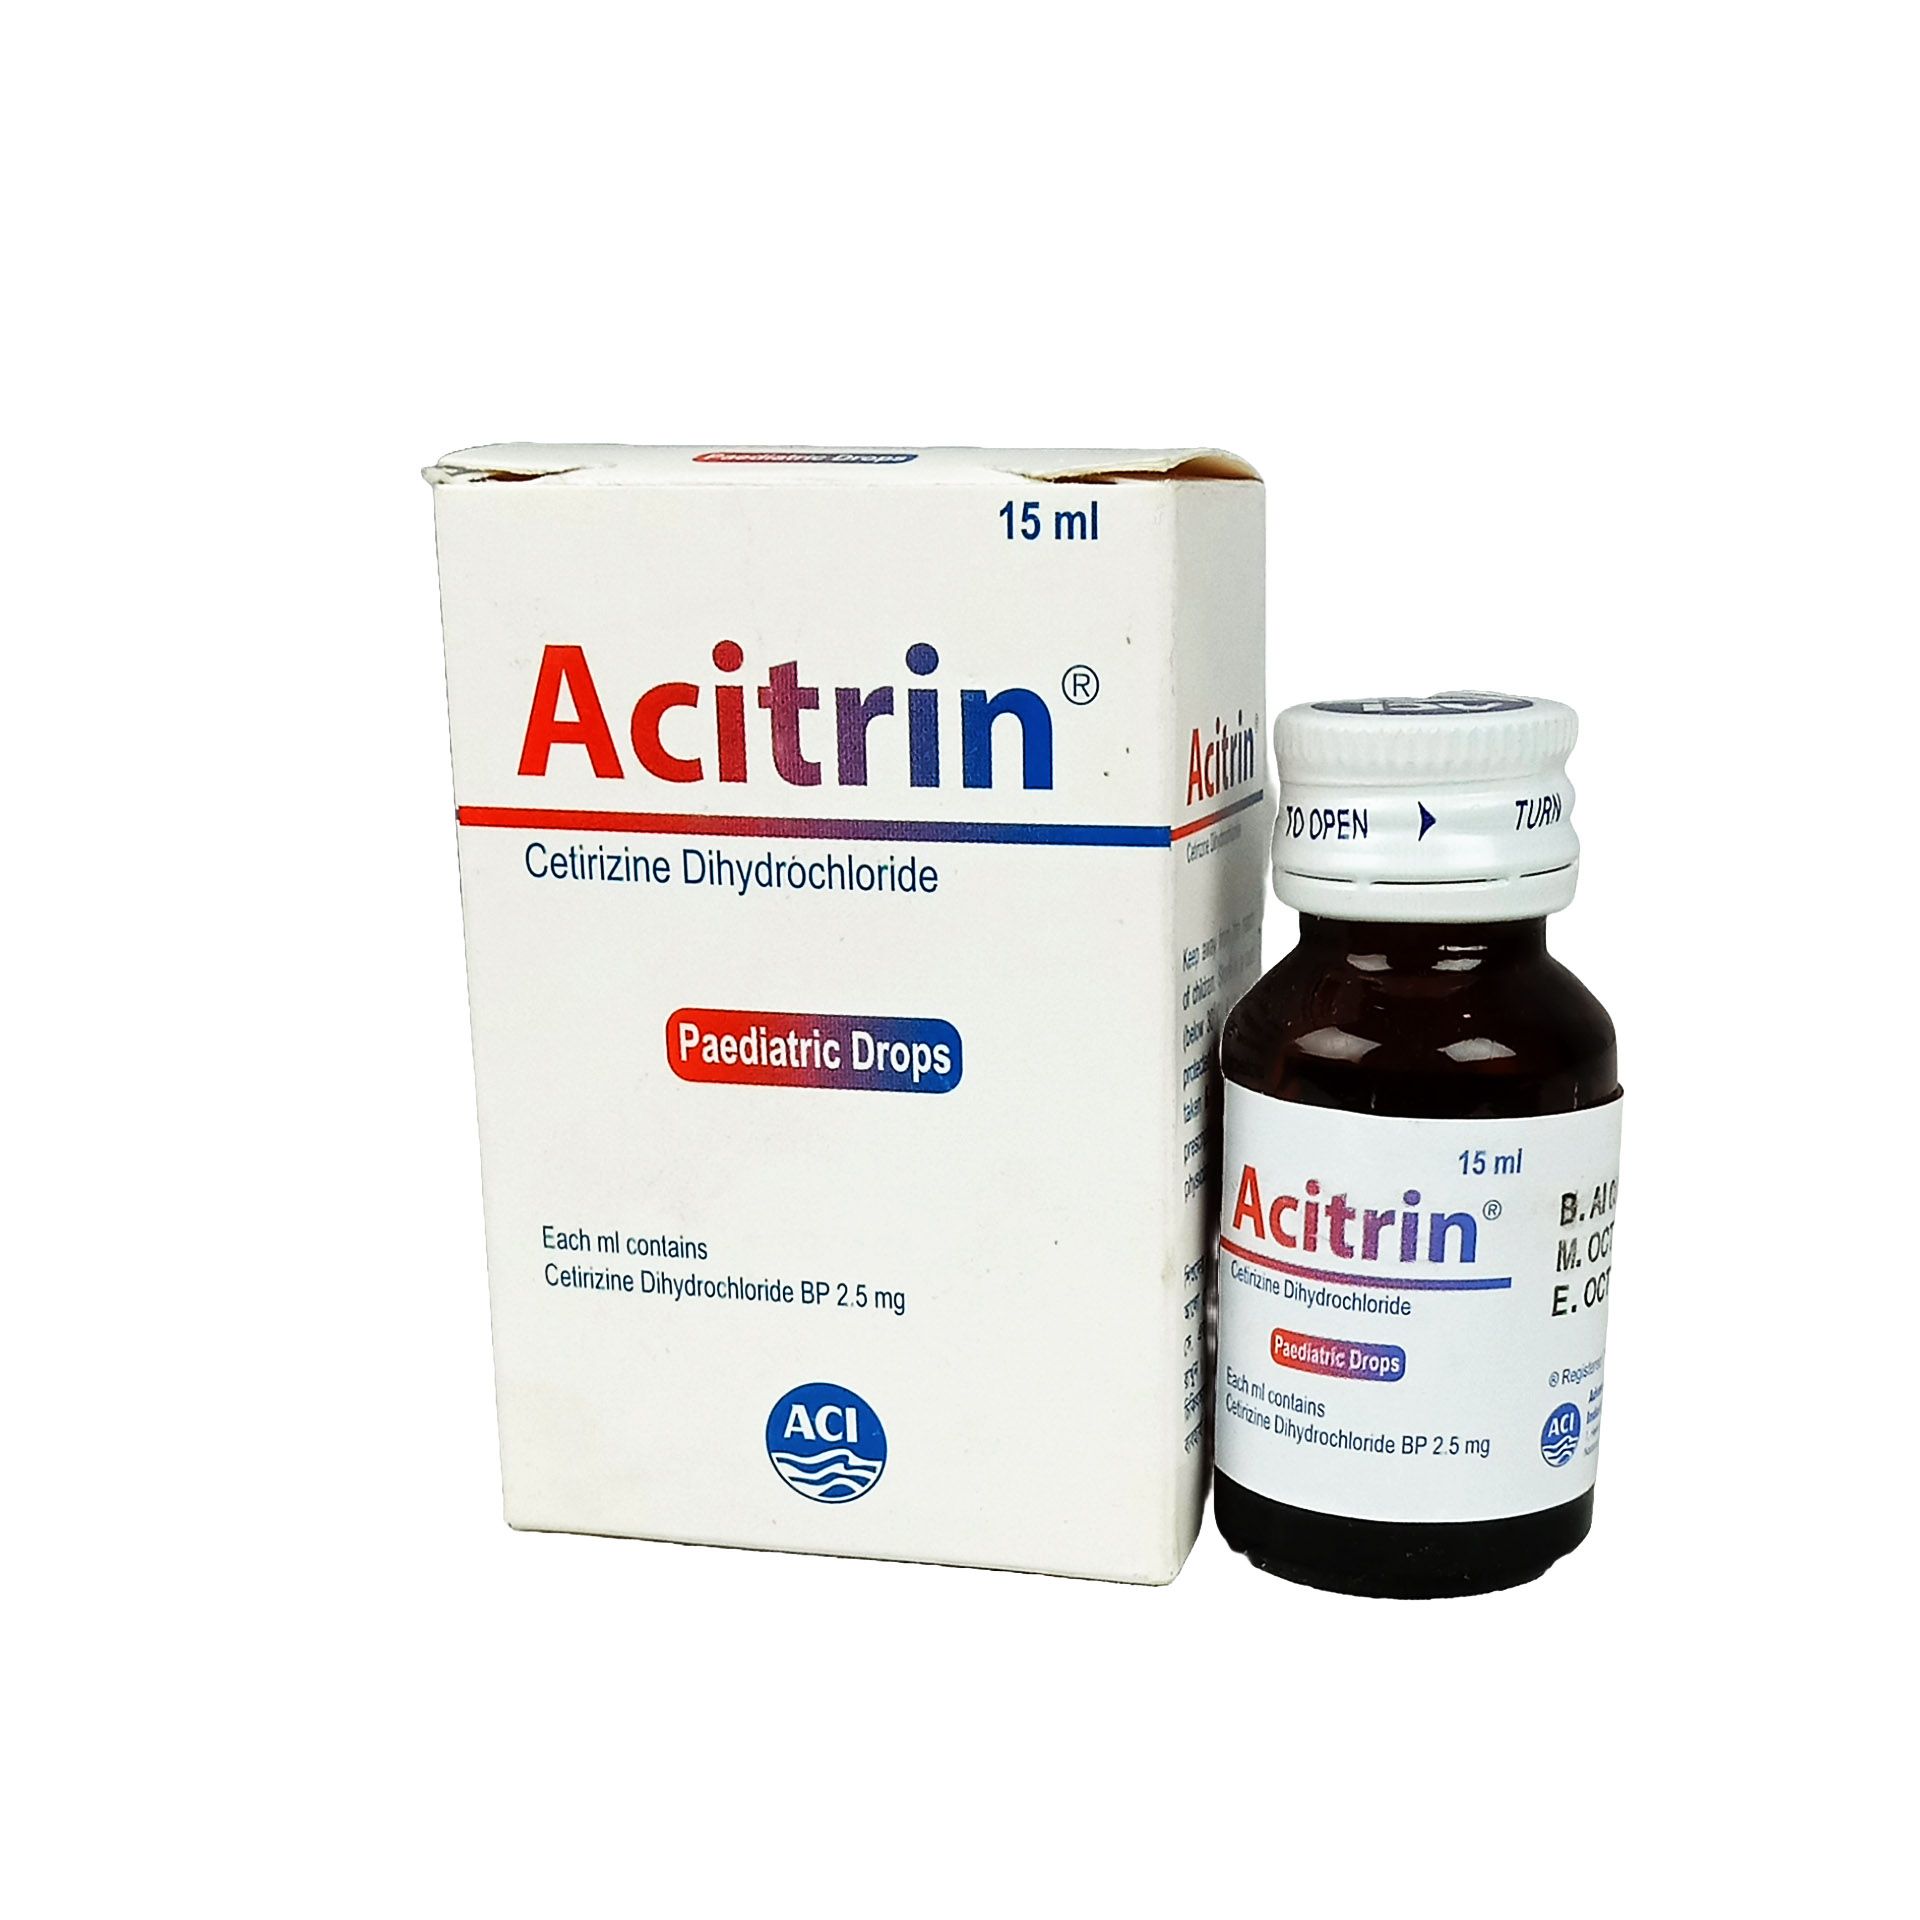 Acitrin 2.5mg/ml Pediatric Drops